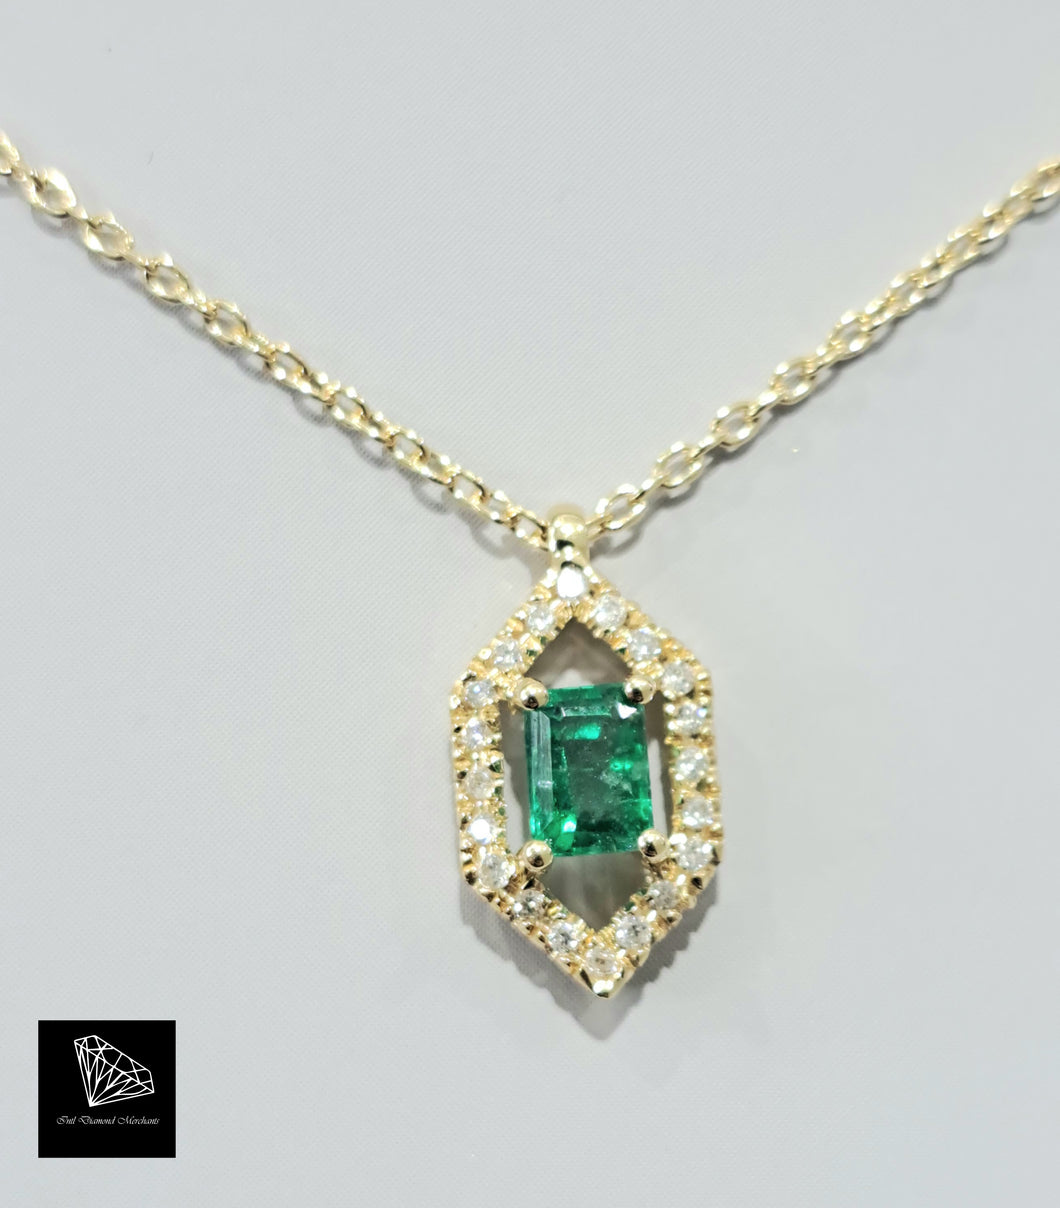 0.35ct Emerald Cut Green Emerald | 0.10cts [20] Round Brilliant Cut Diamonds | Designer Pendant with Chain | 18kt Yellow Gold